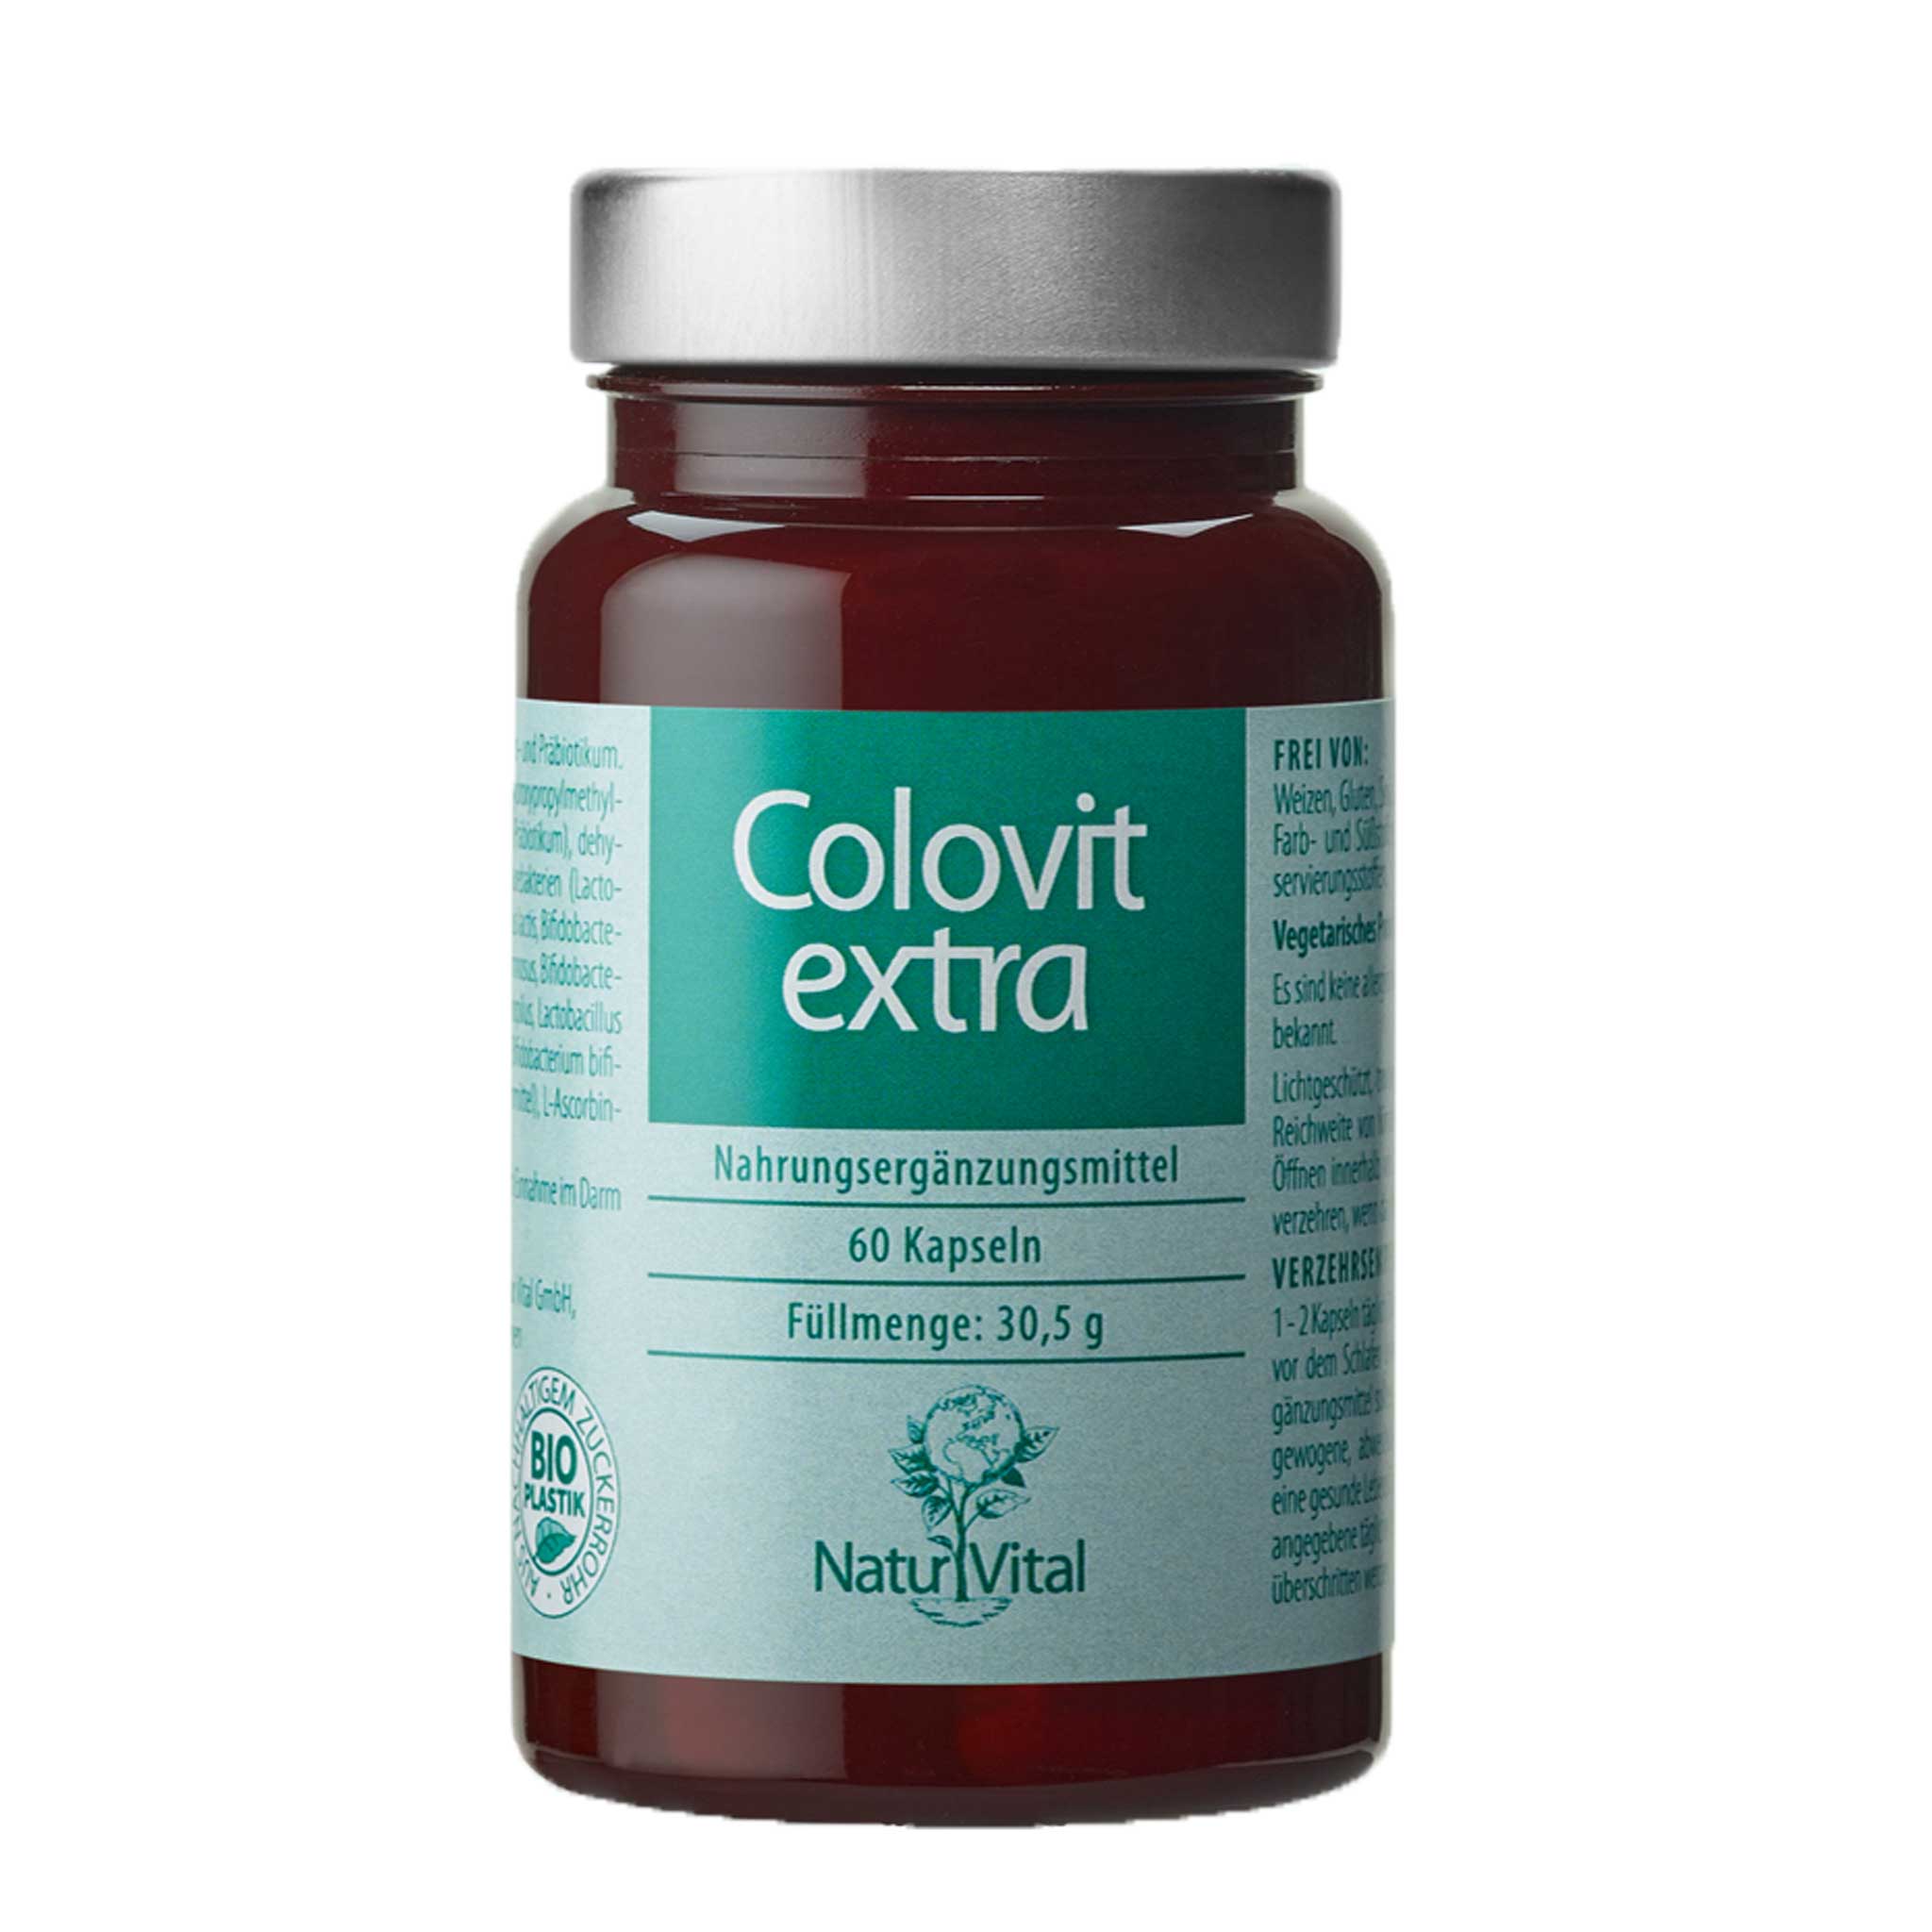 Colovit extra, 60 Kapseln